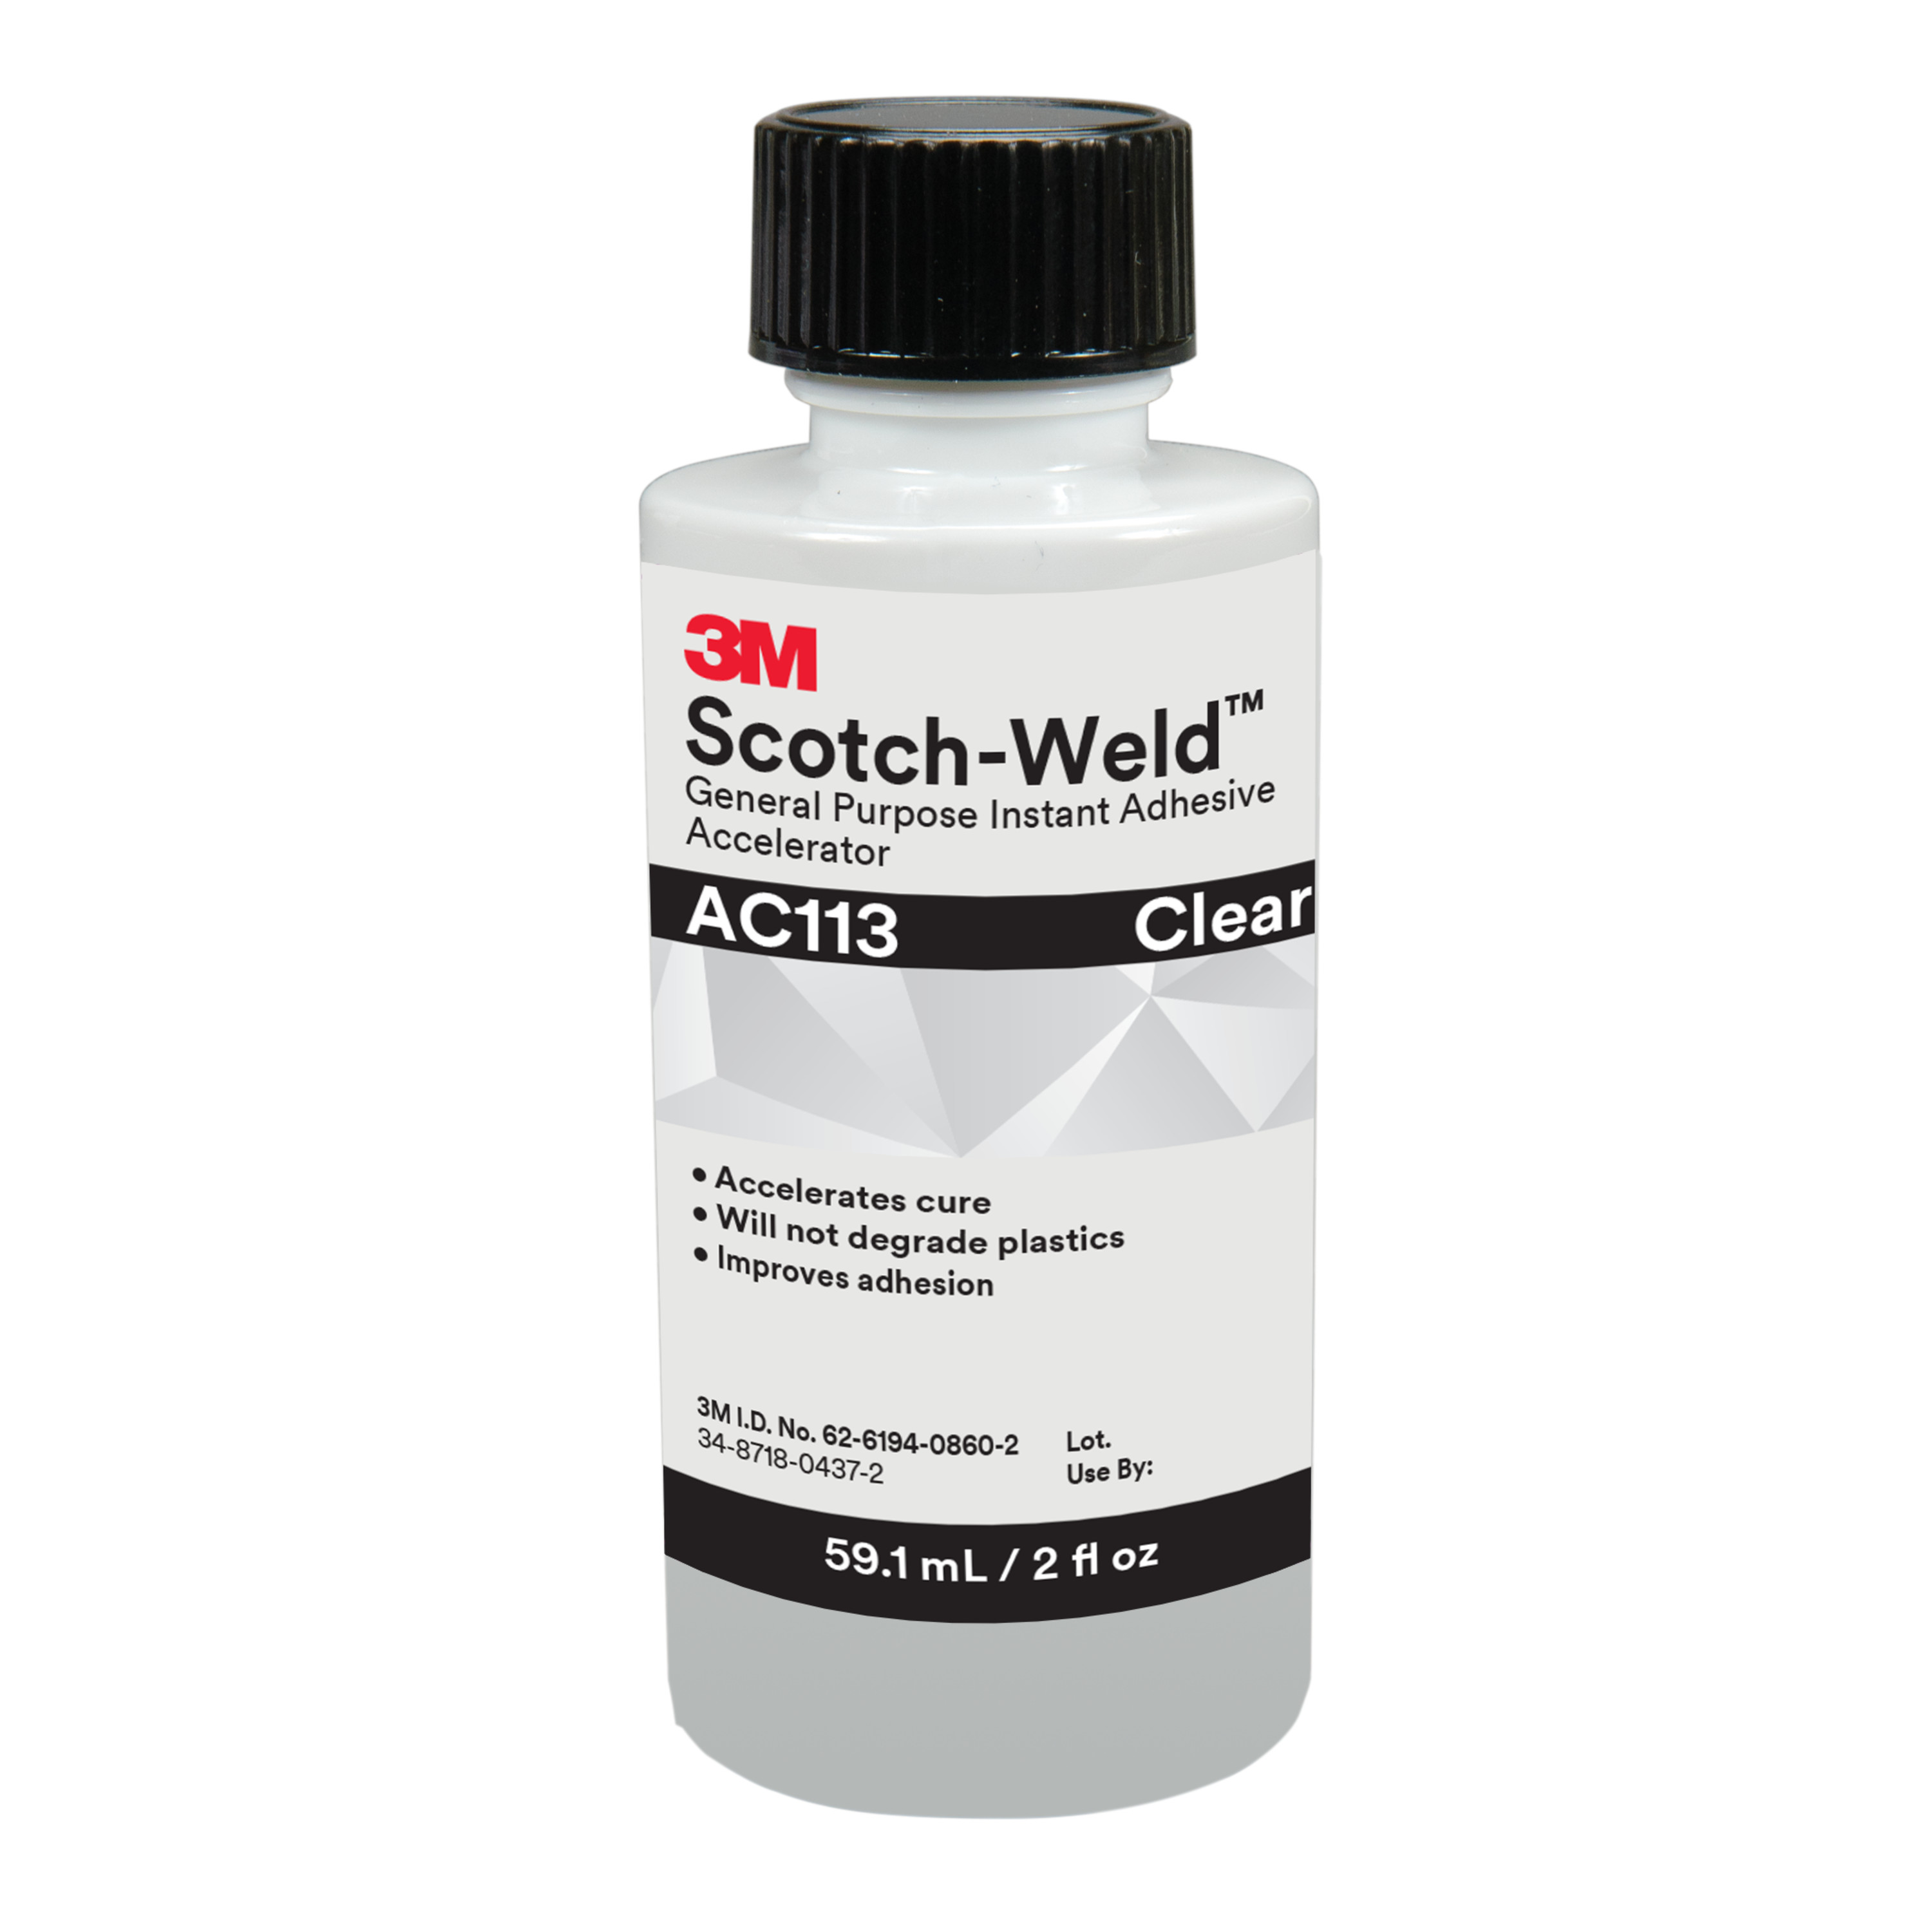 3M™ Scotch-Weld™ General Purpose Instant Adhesive Accelerator AC113,
Clear/Light Amber, 2 fl oz Bottle, 10/case